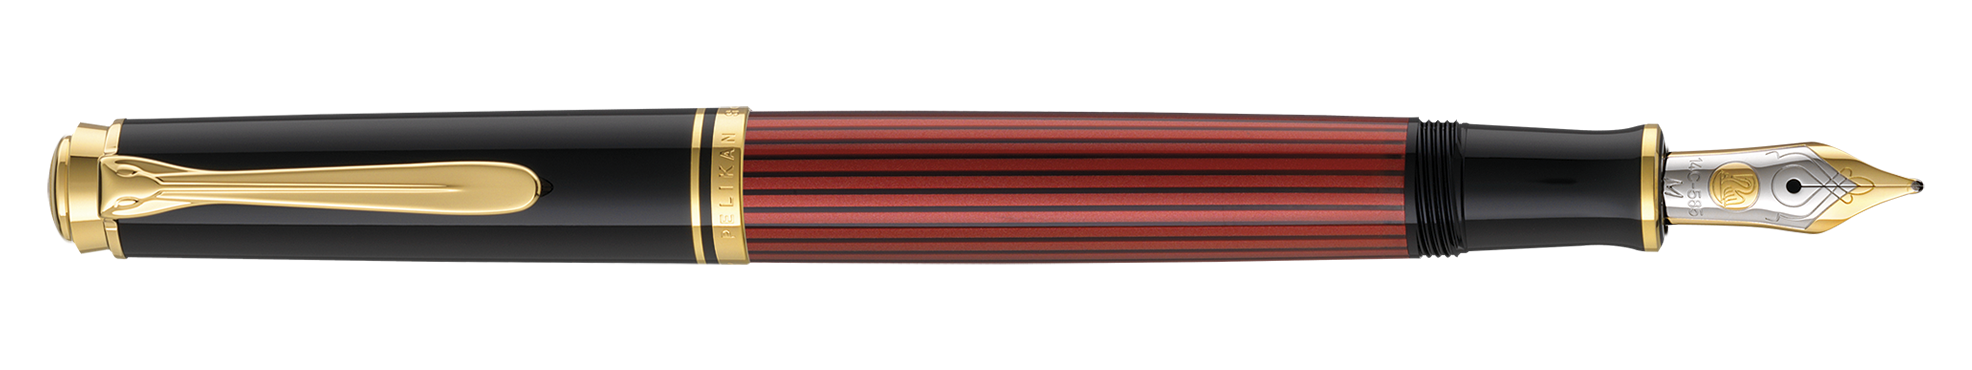 Souverän® 400 Black-Red